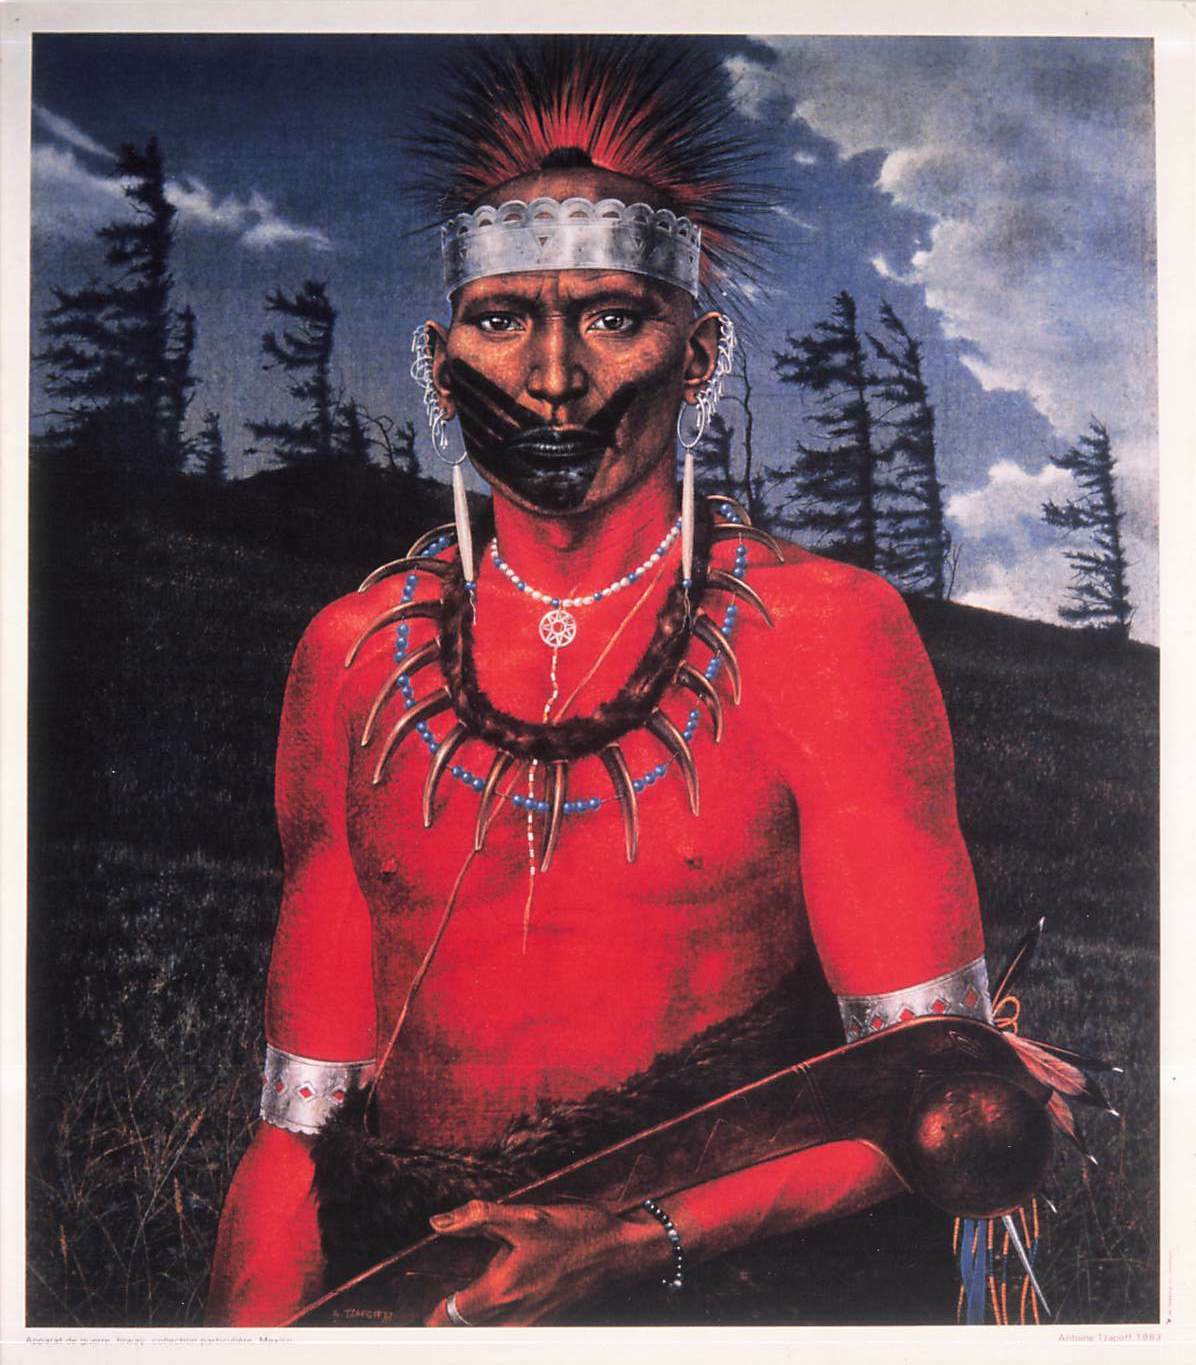 1989 Press Photo NORTH AMERICAN INDIAN CULTURE Exhibit Native American art kg